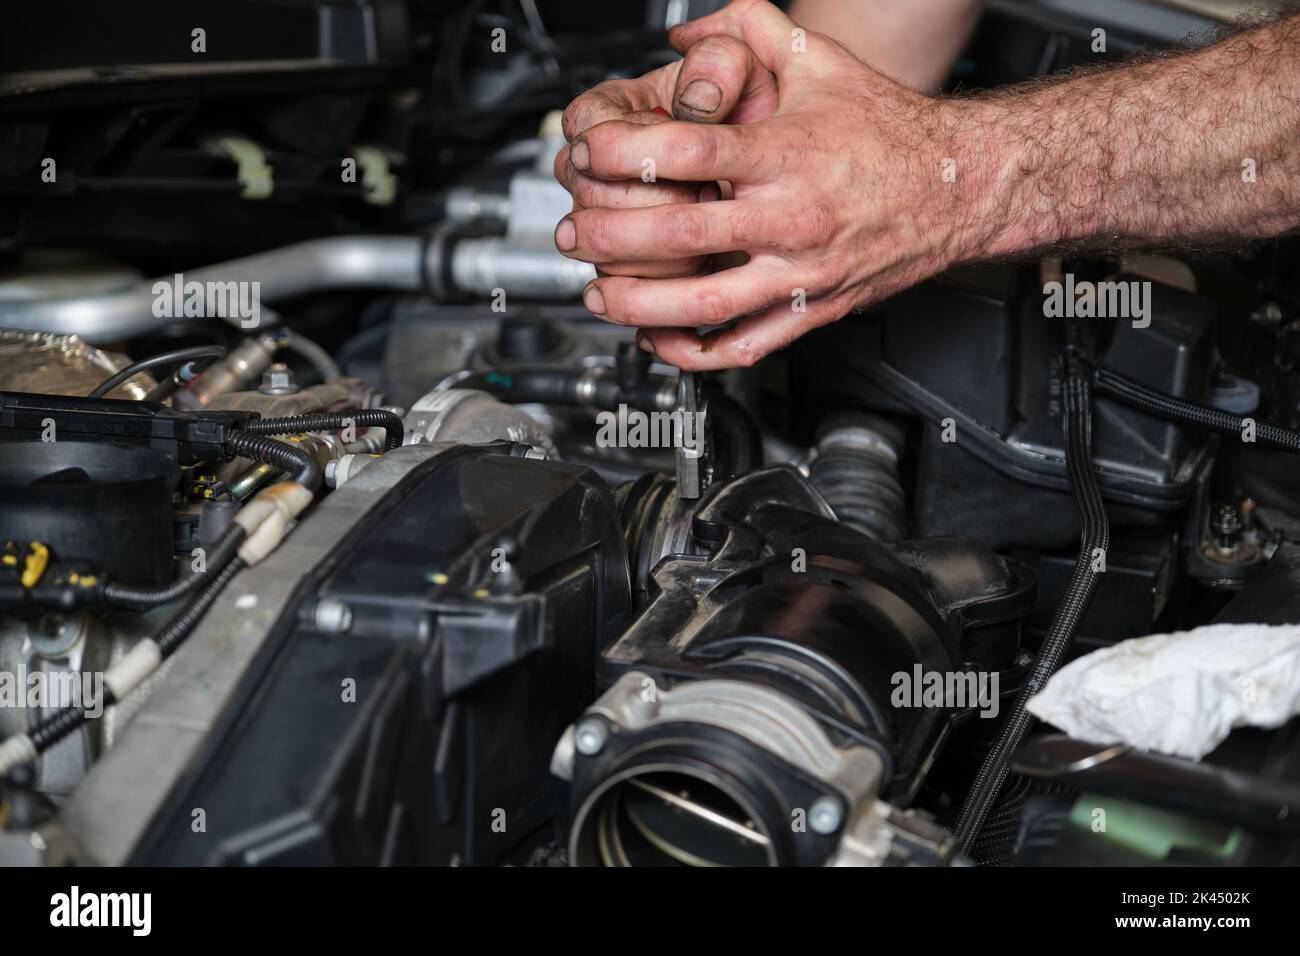 Car mechanic hands replacing engine throttle body. Stock Photo